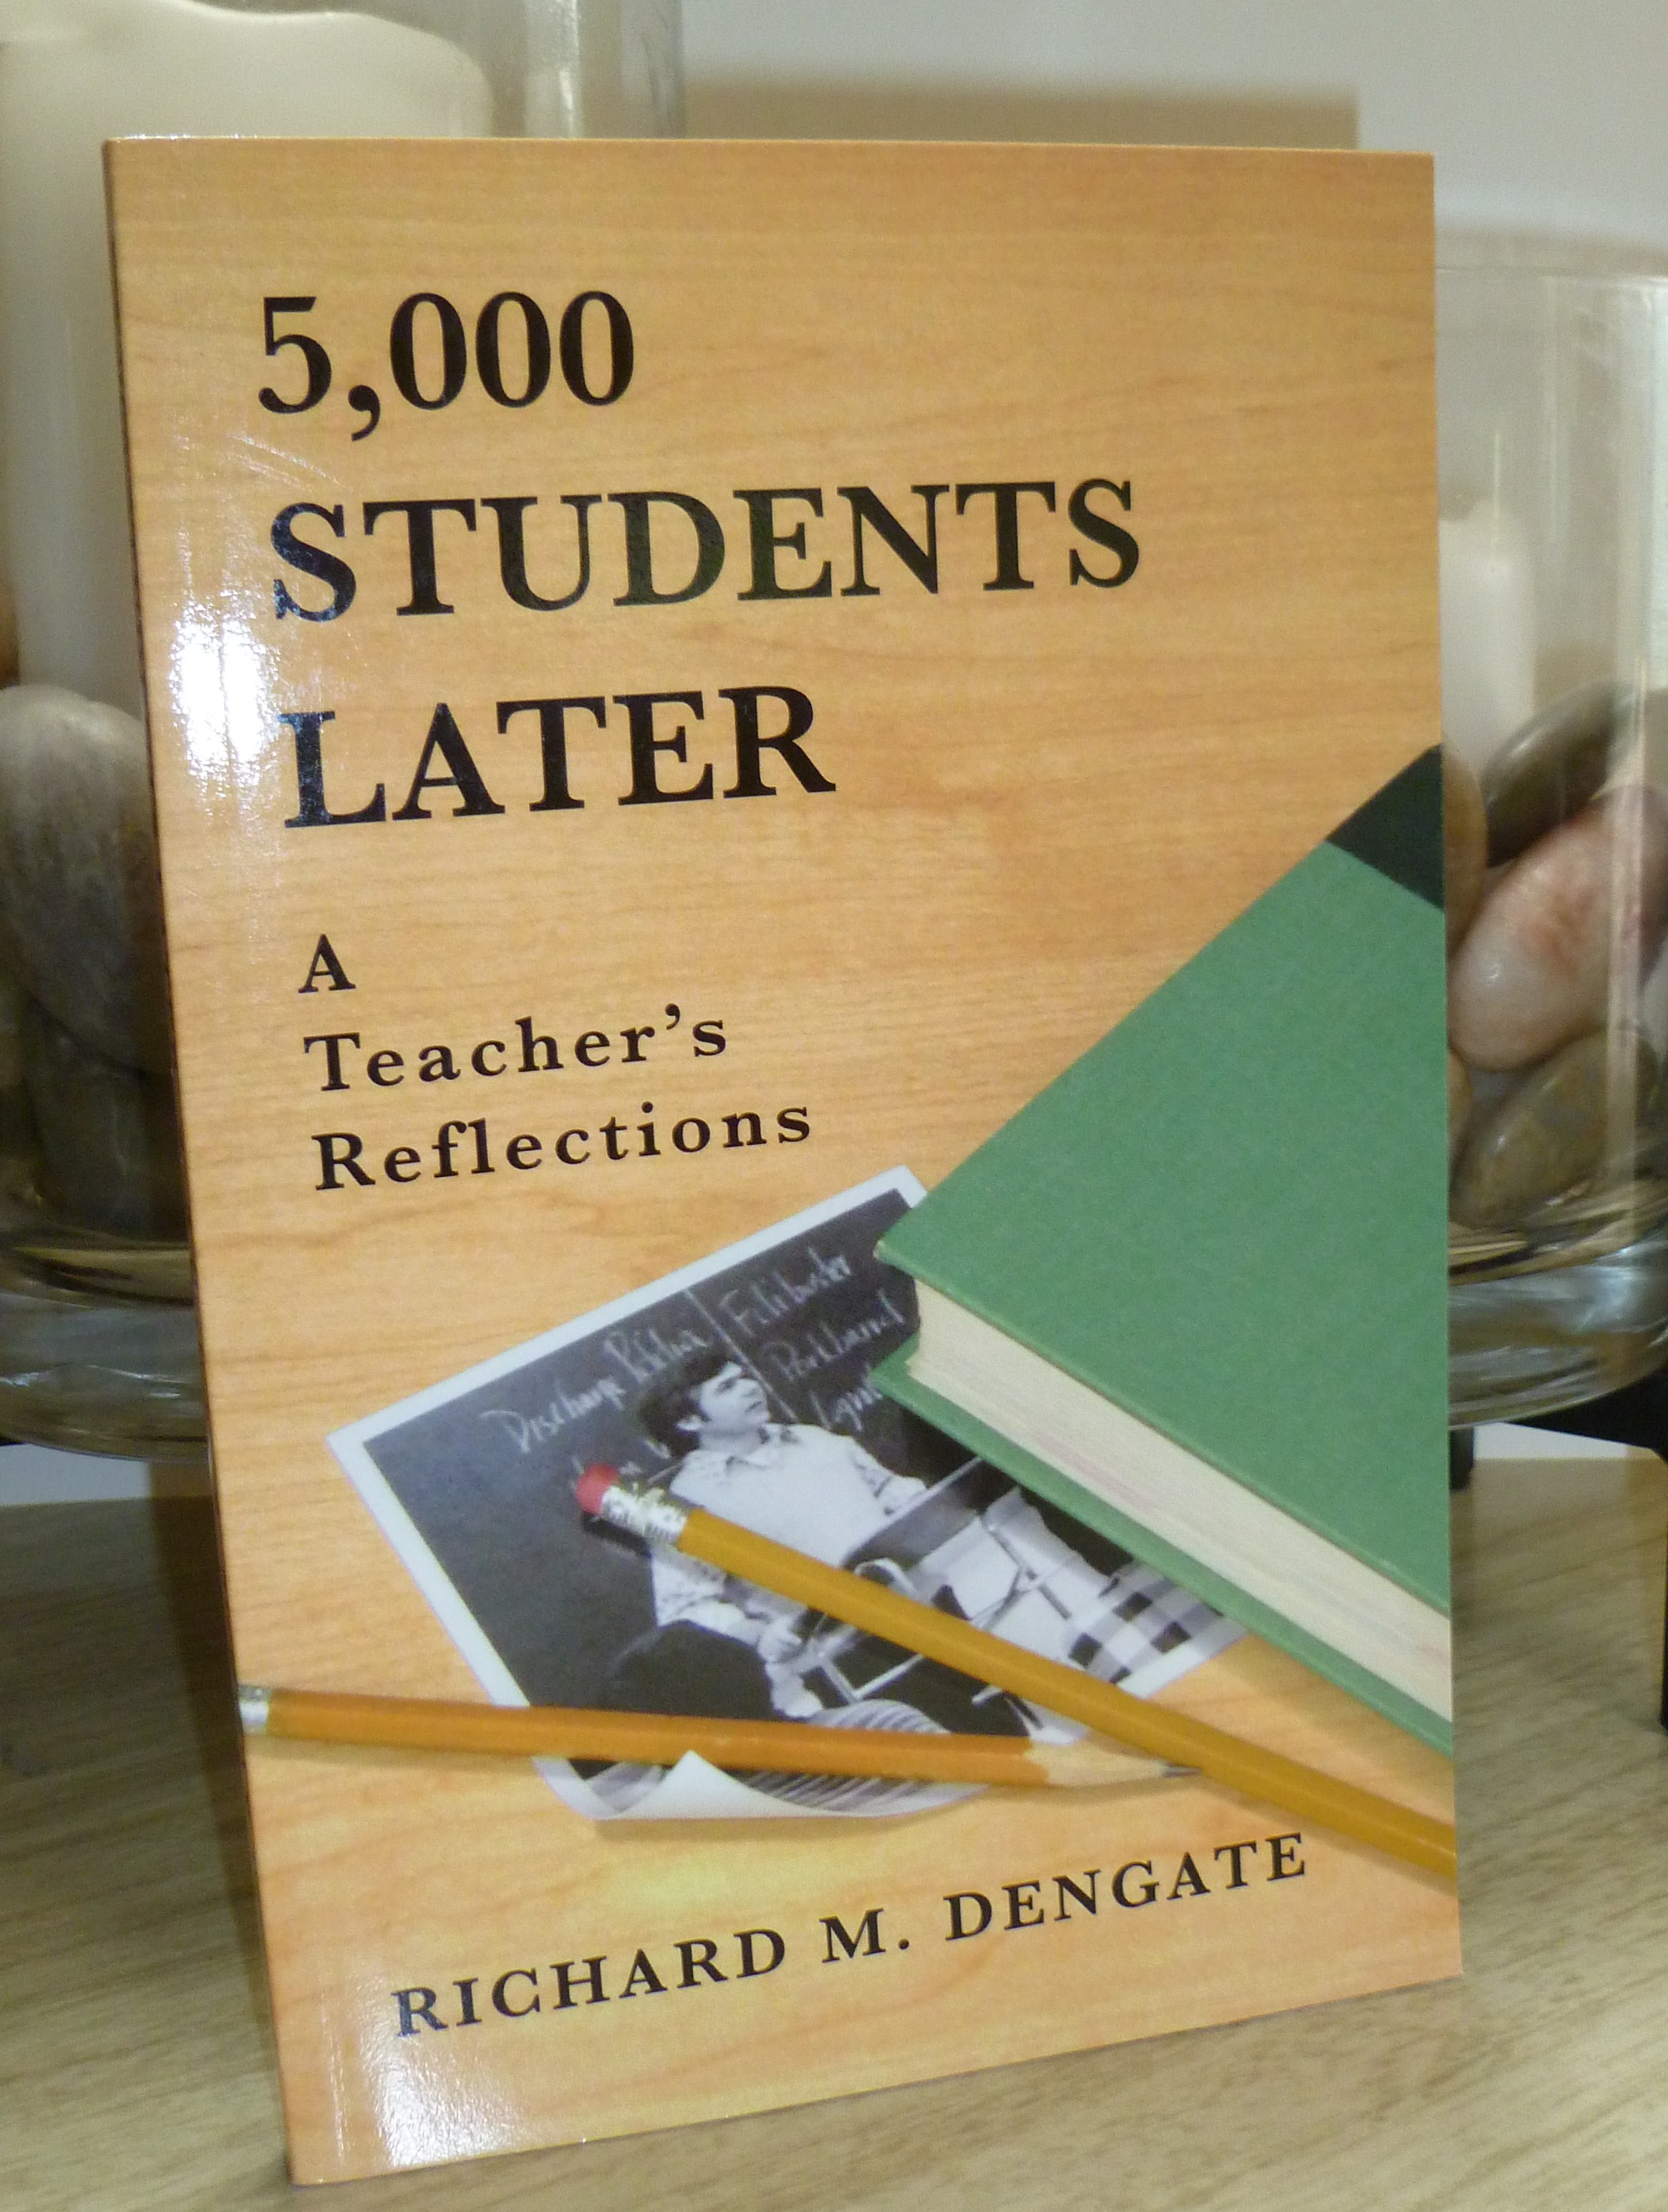 Contact Bea Sacks to purchase Mr. Dengate's Book. bea48070@aol.com